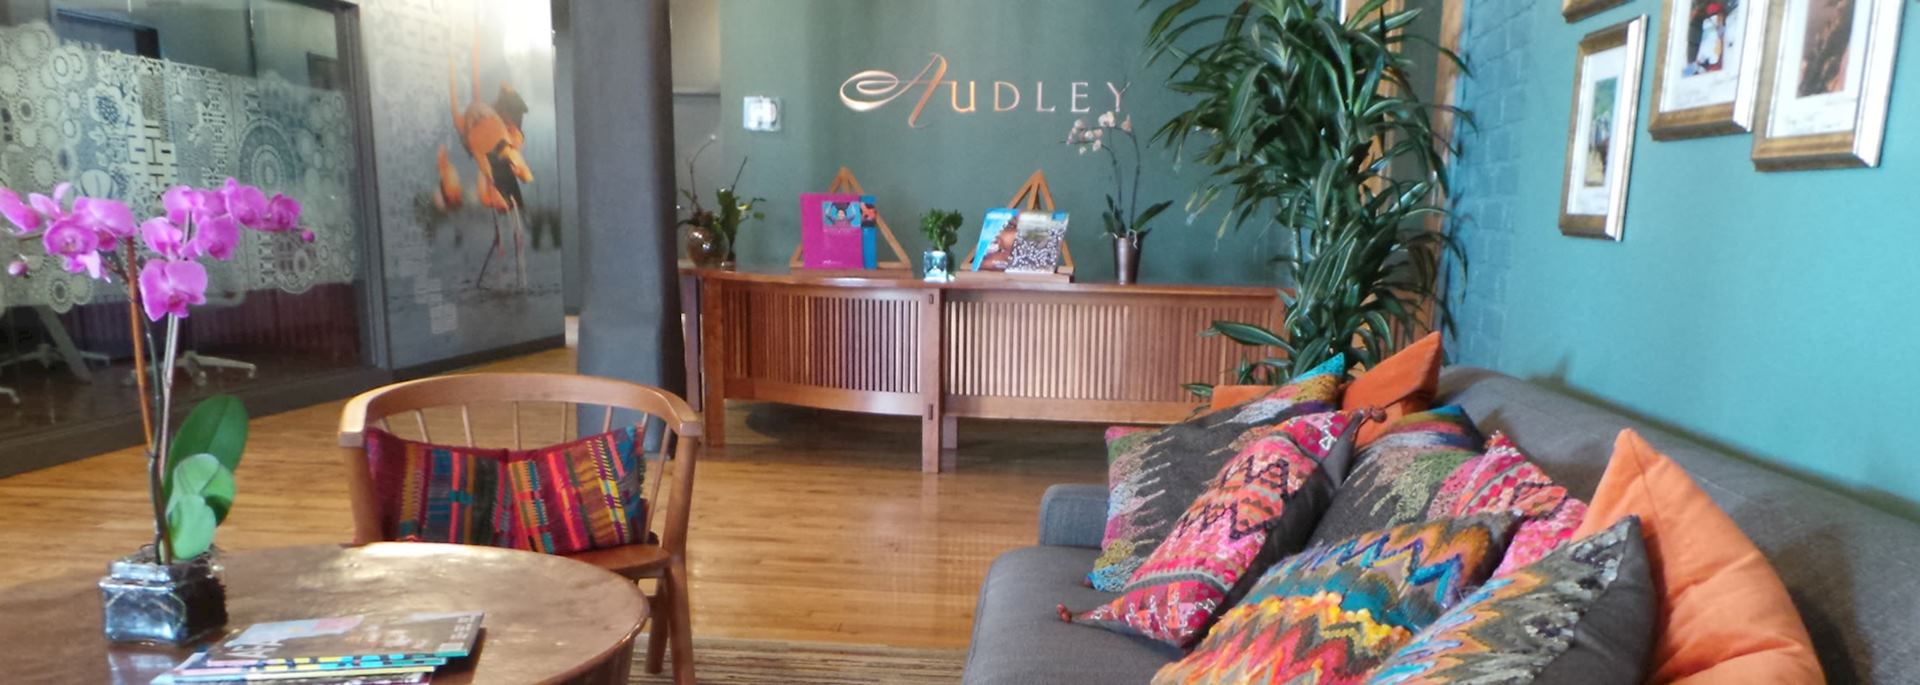 Audley office in Boston